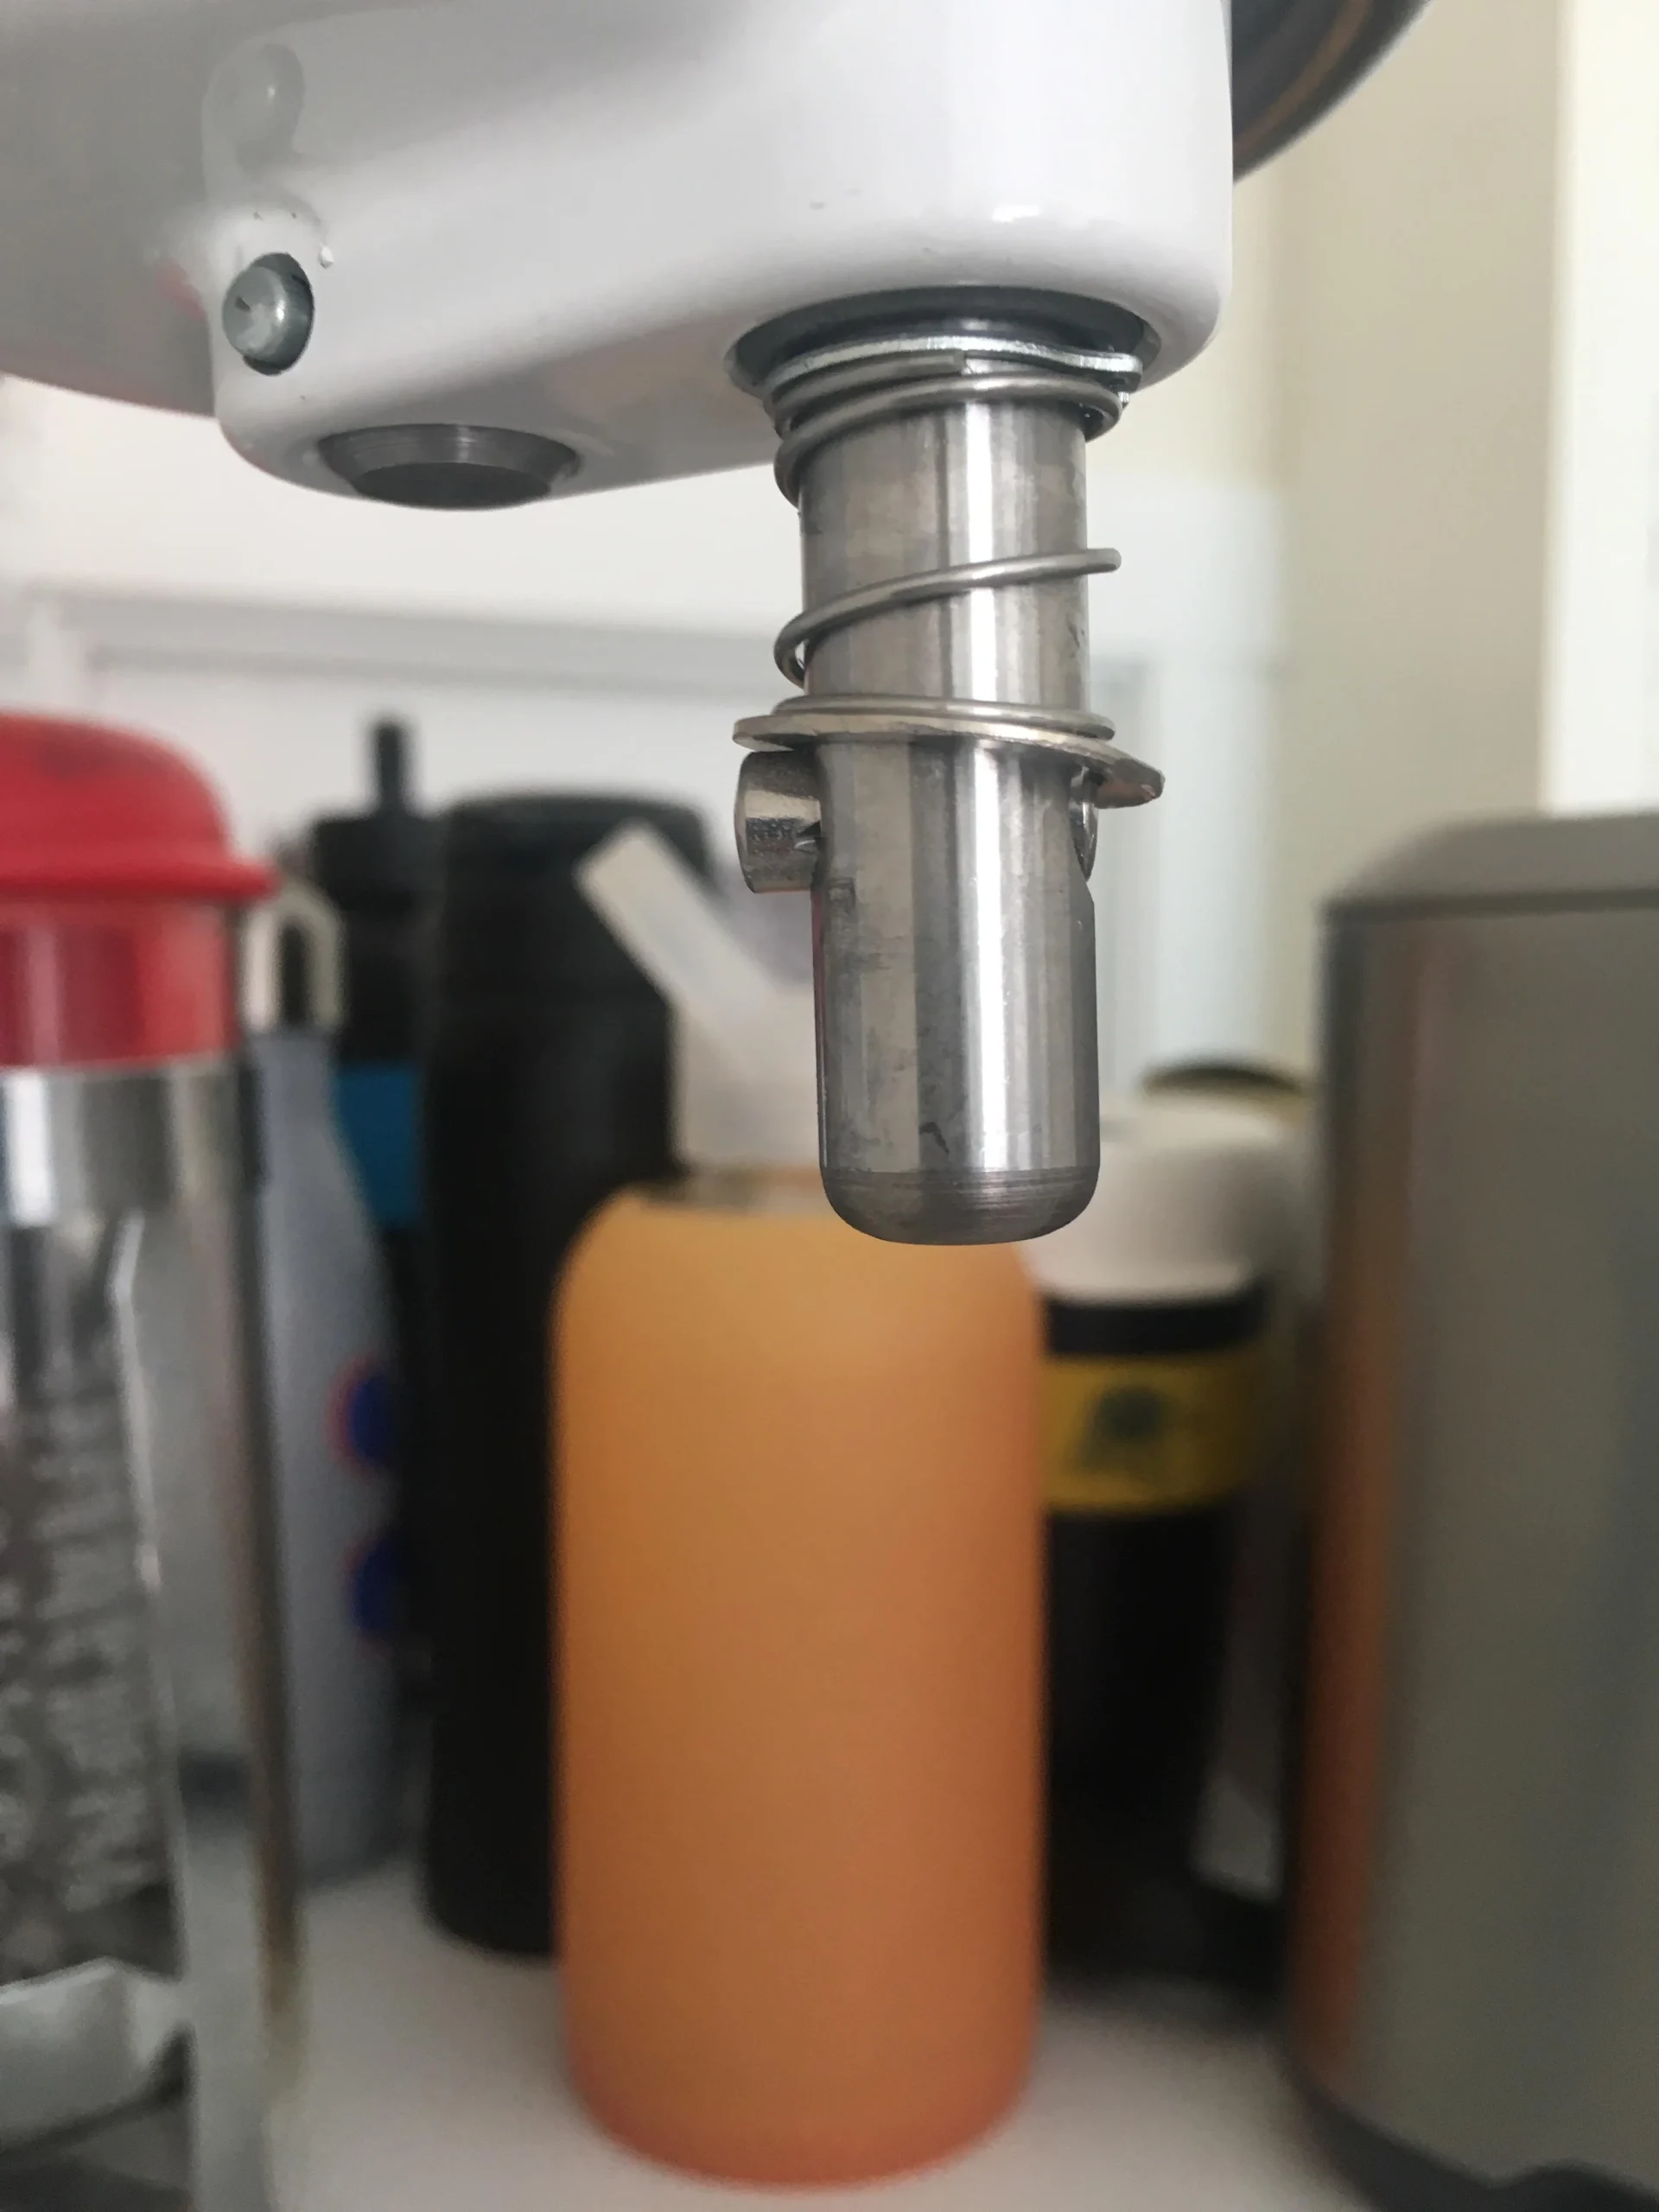 How To Fix Kitchenaid Mixer Stuck Pin